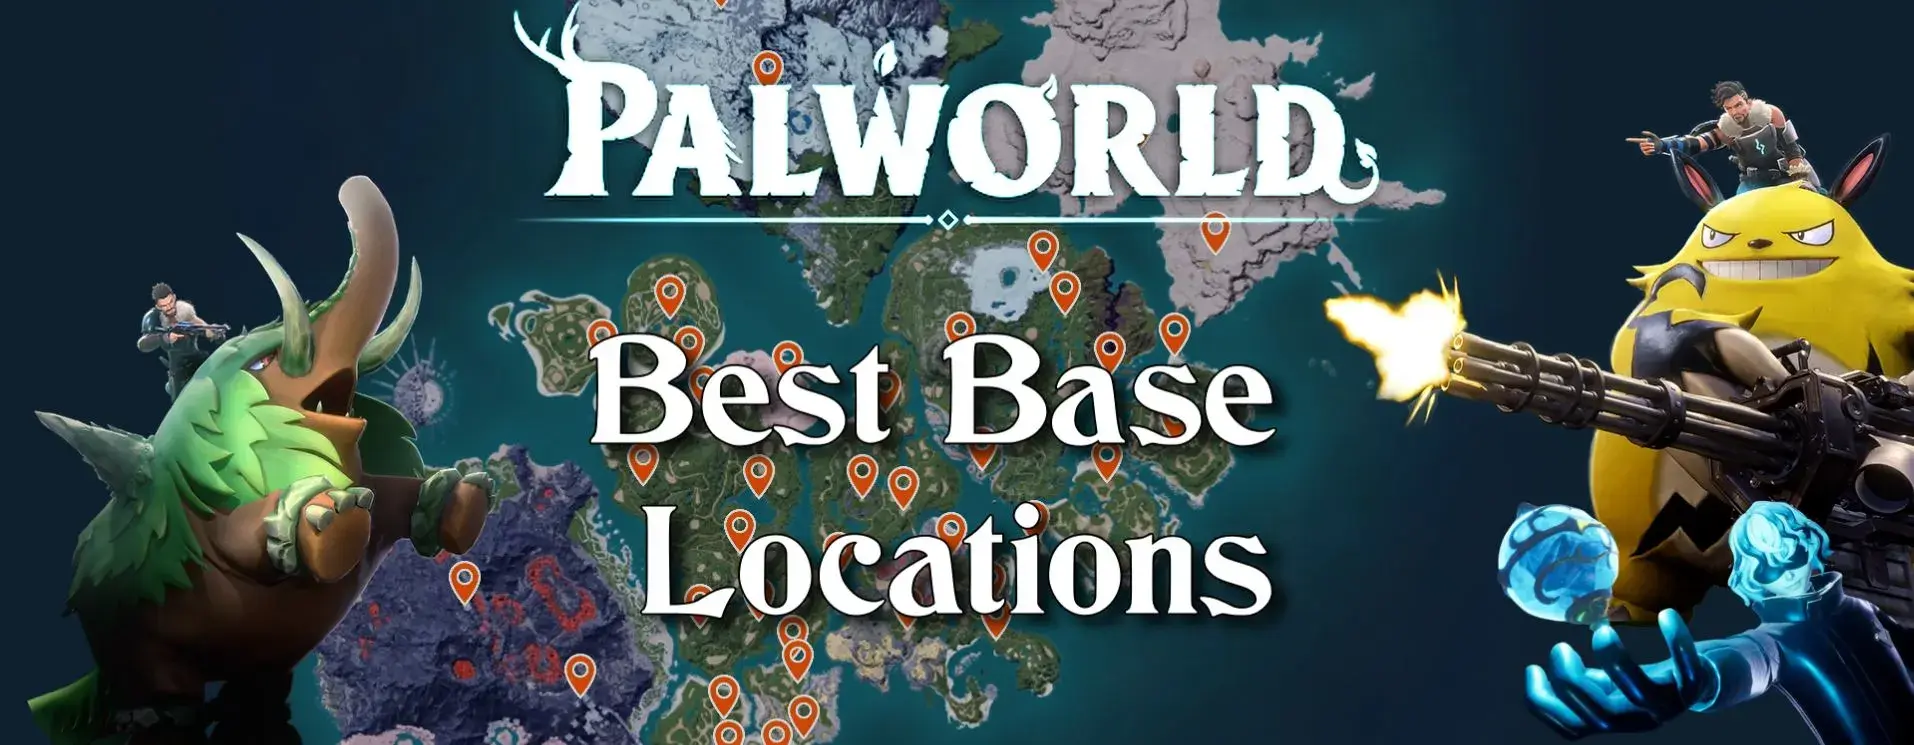 palworld best base locations mac360